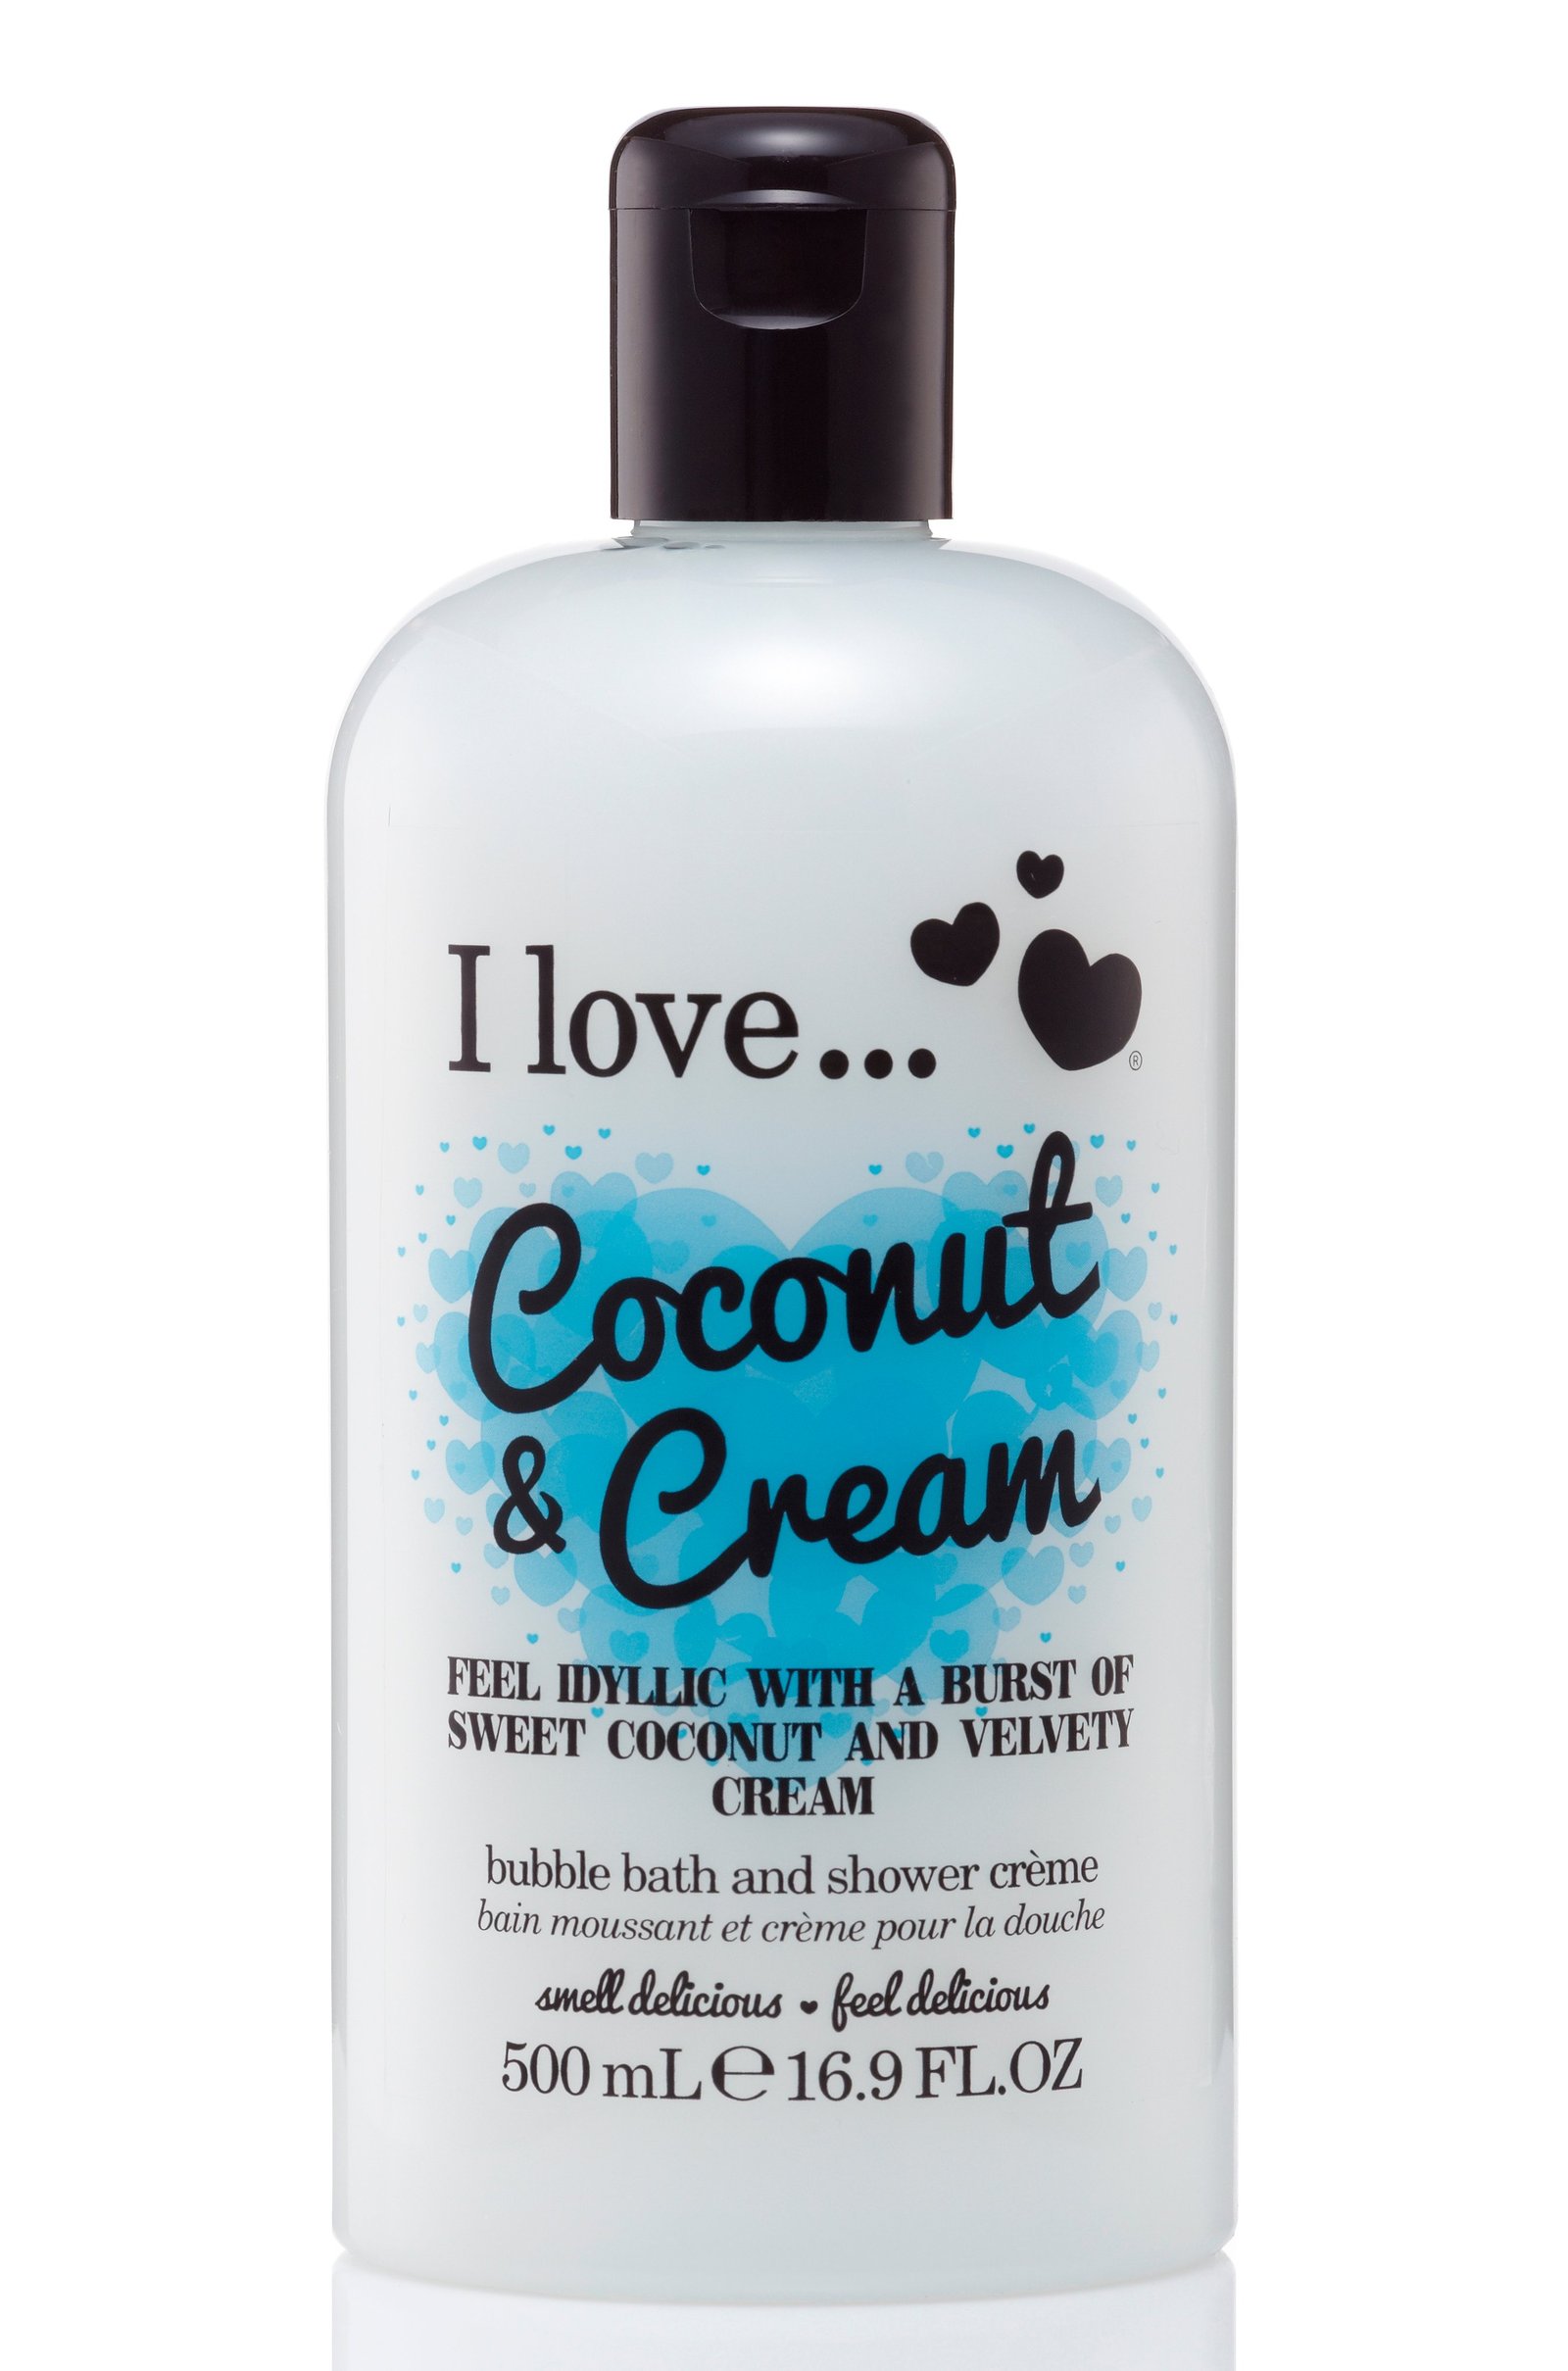 I Love Original Coconut & Cream Shower 500 ml